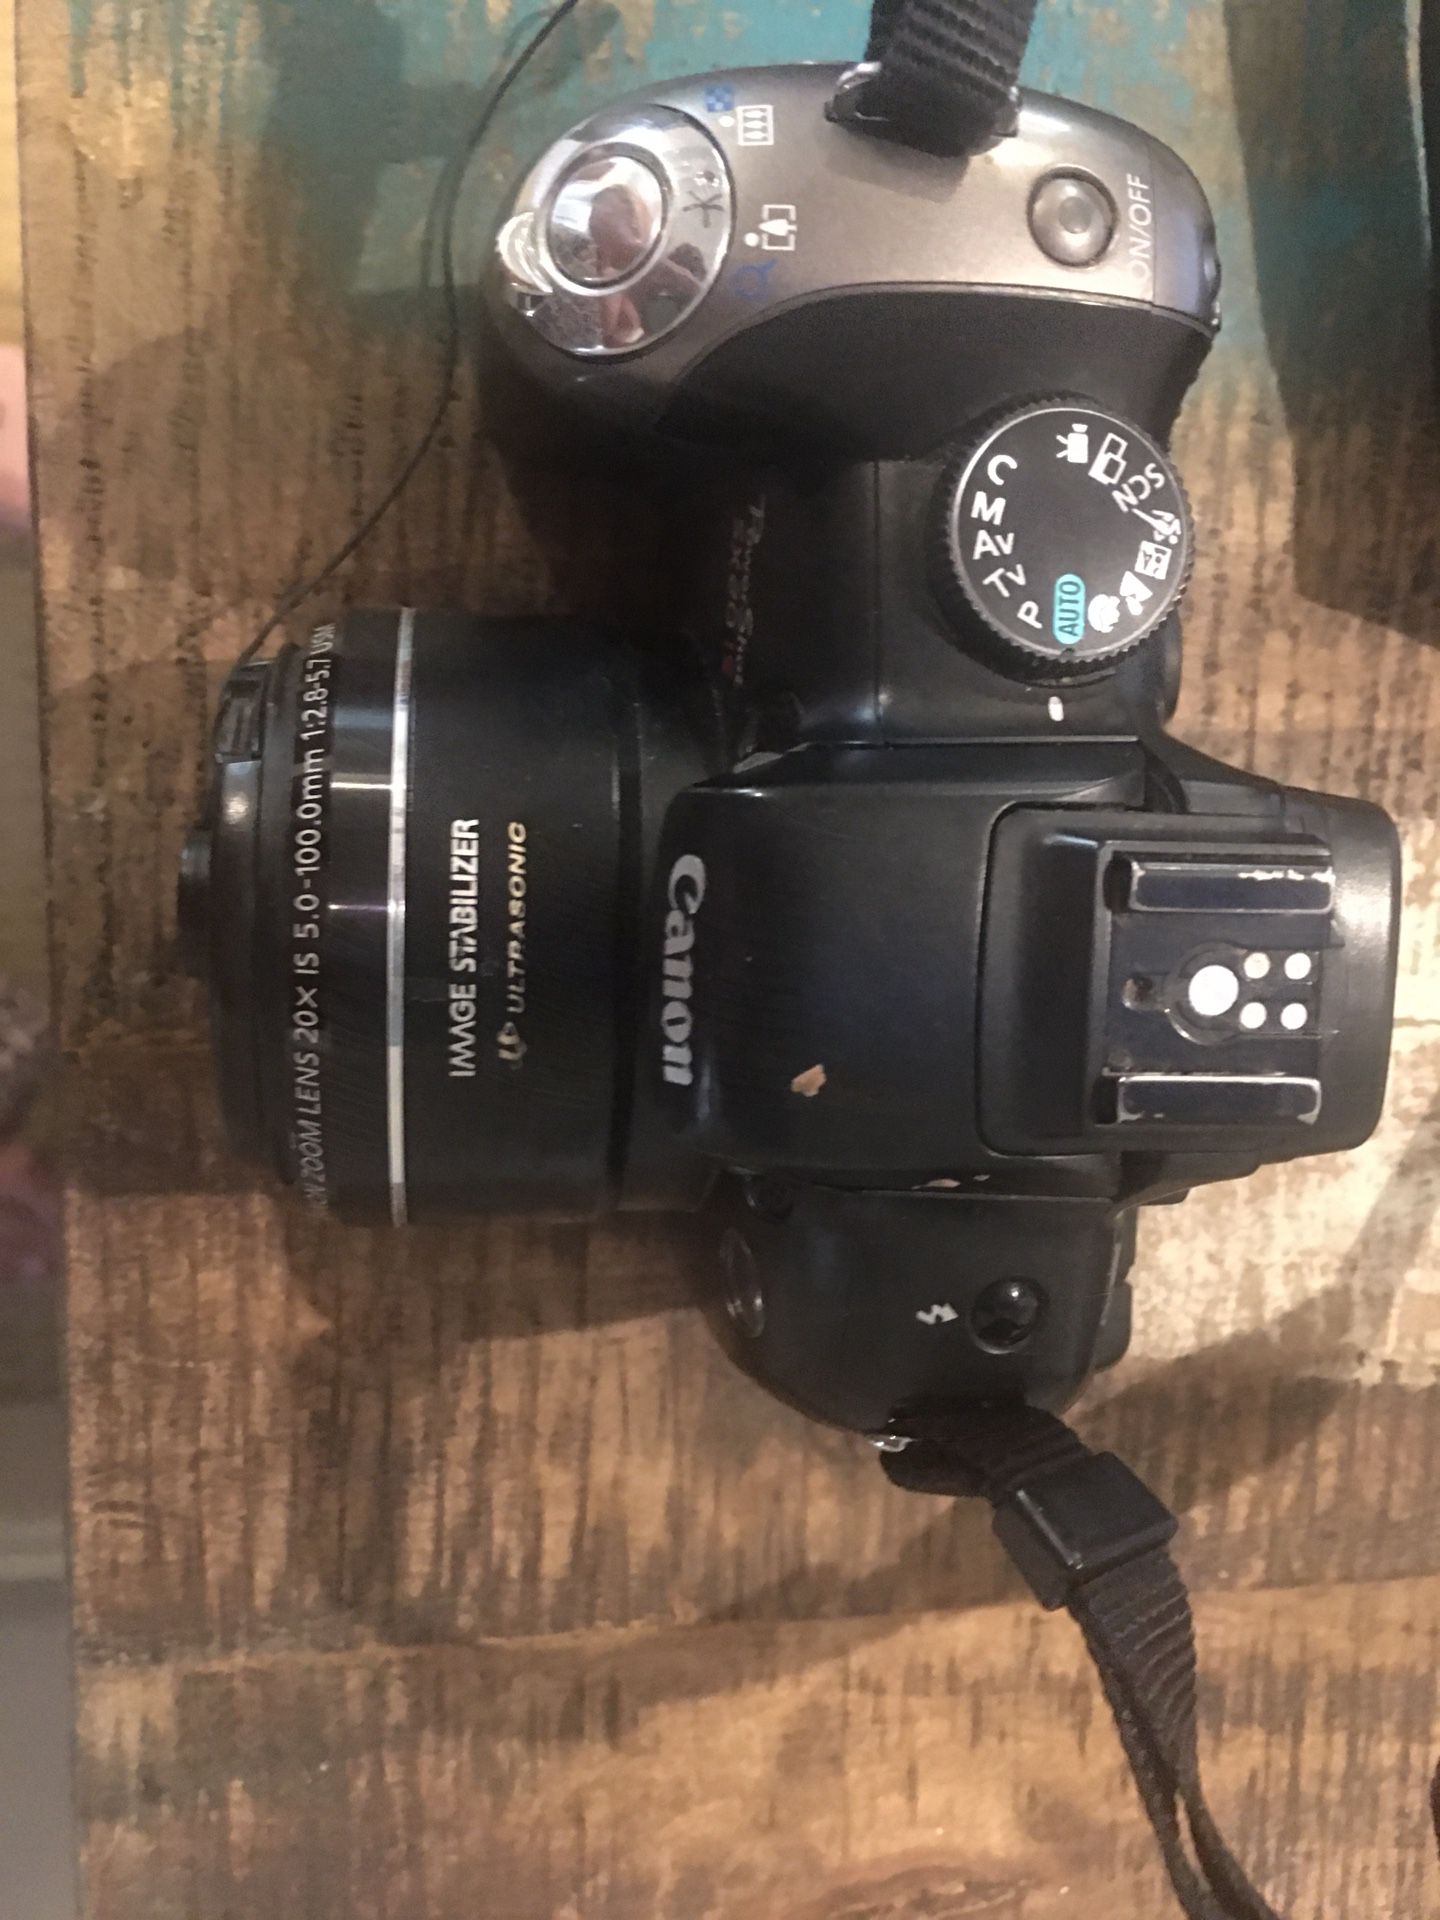 Digital camera - Canon PowerShot SX20IS